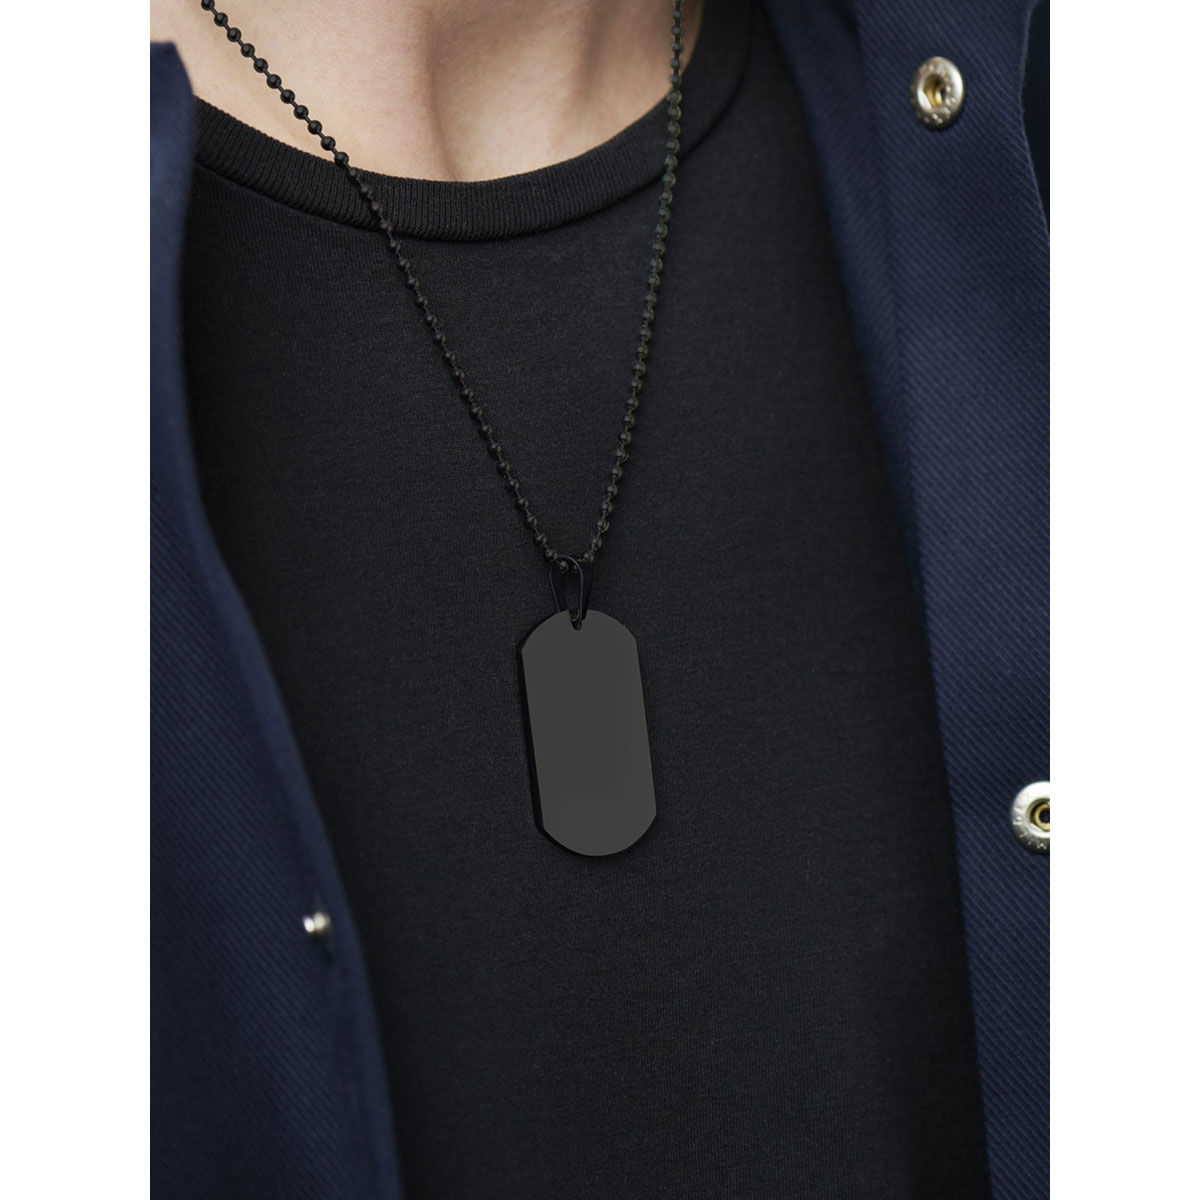 Men's Steel Black Dog Tag Necklace | Engraved Jewellery | Gifts For Men